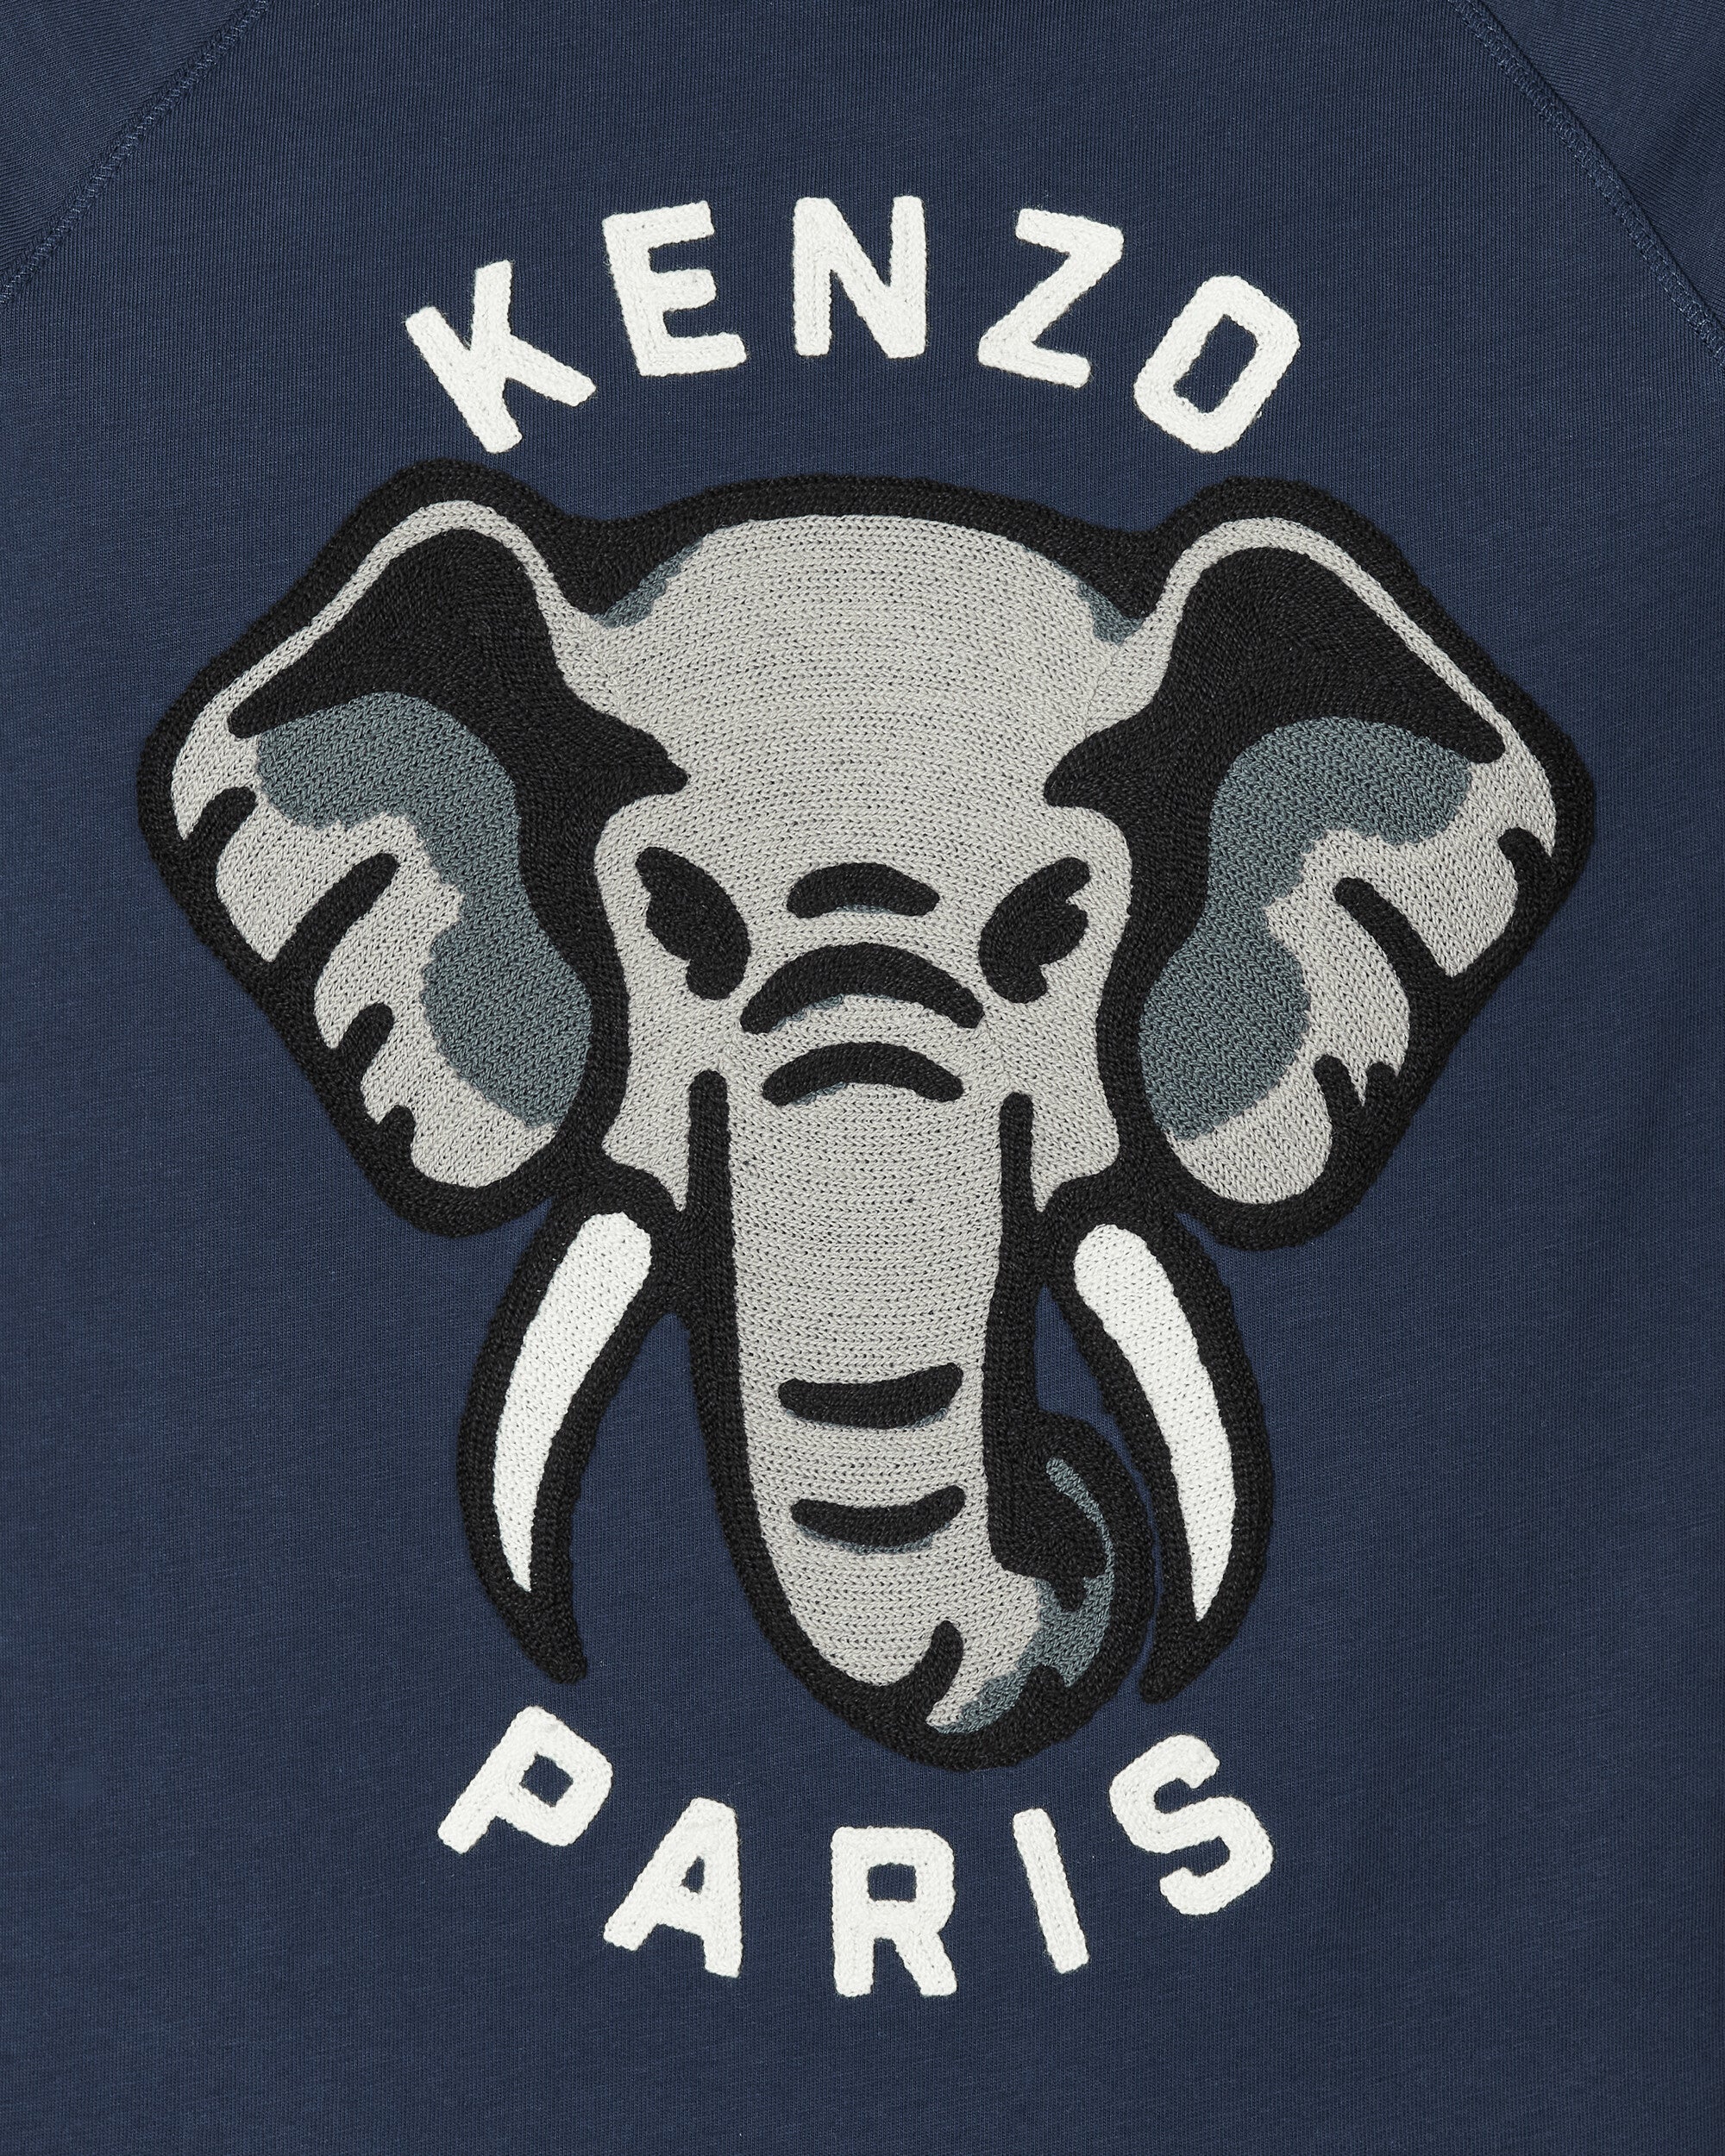 Kenzo Paris Ken Zo Slim T-Shirt Midnight Blue T-Shirts Shortsleeve FD55TS4514SC 77